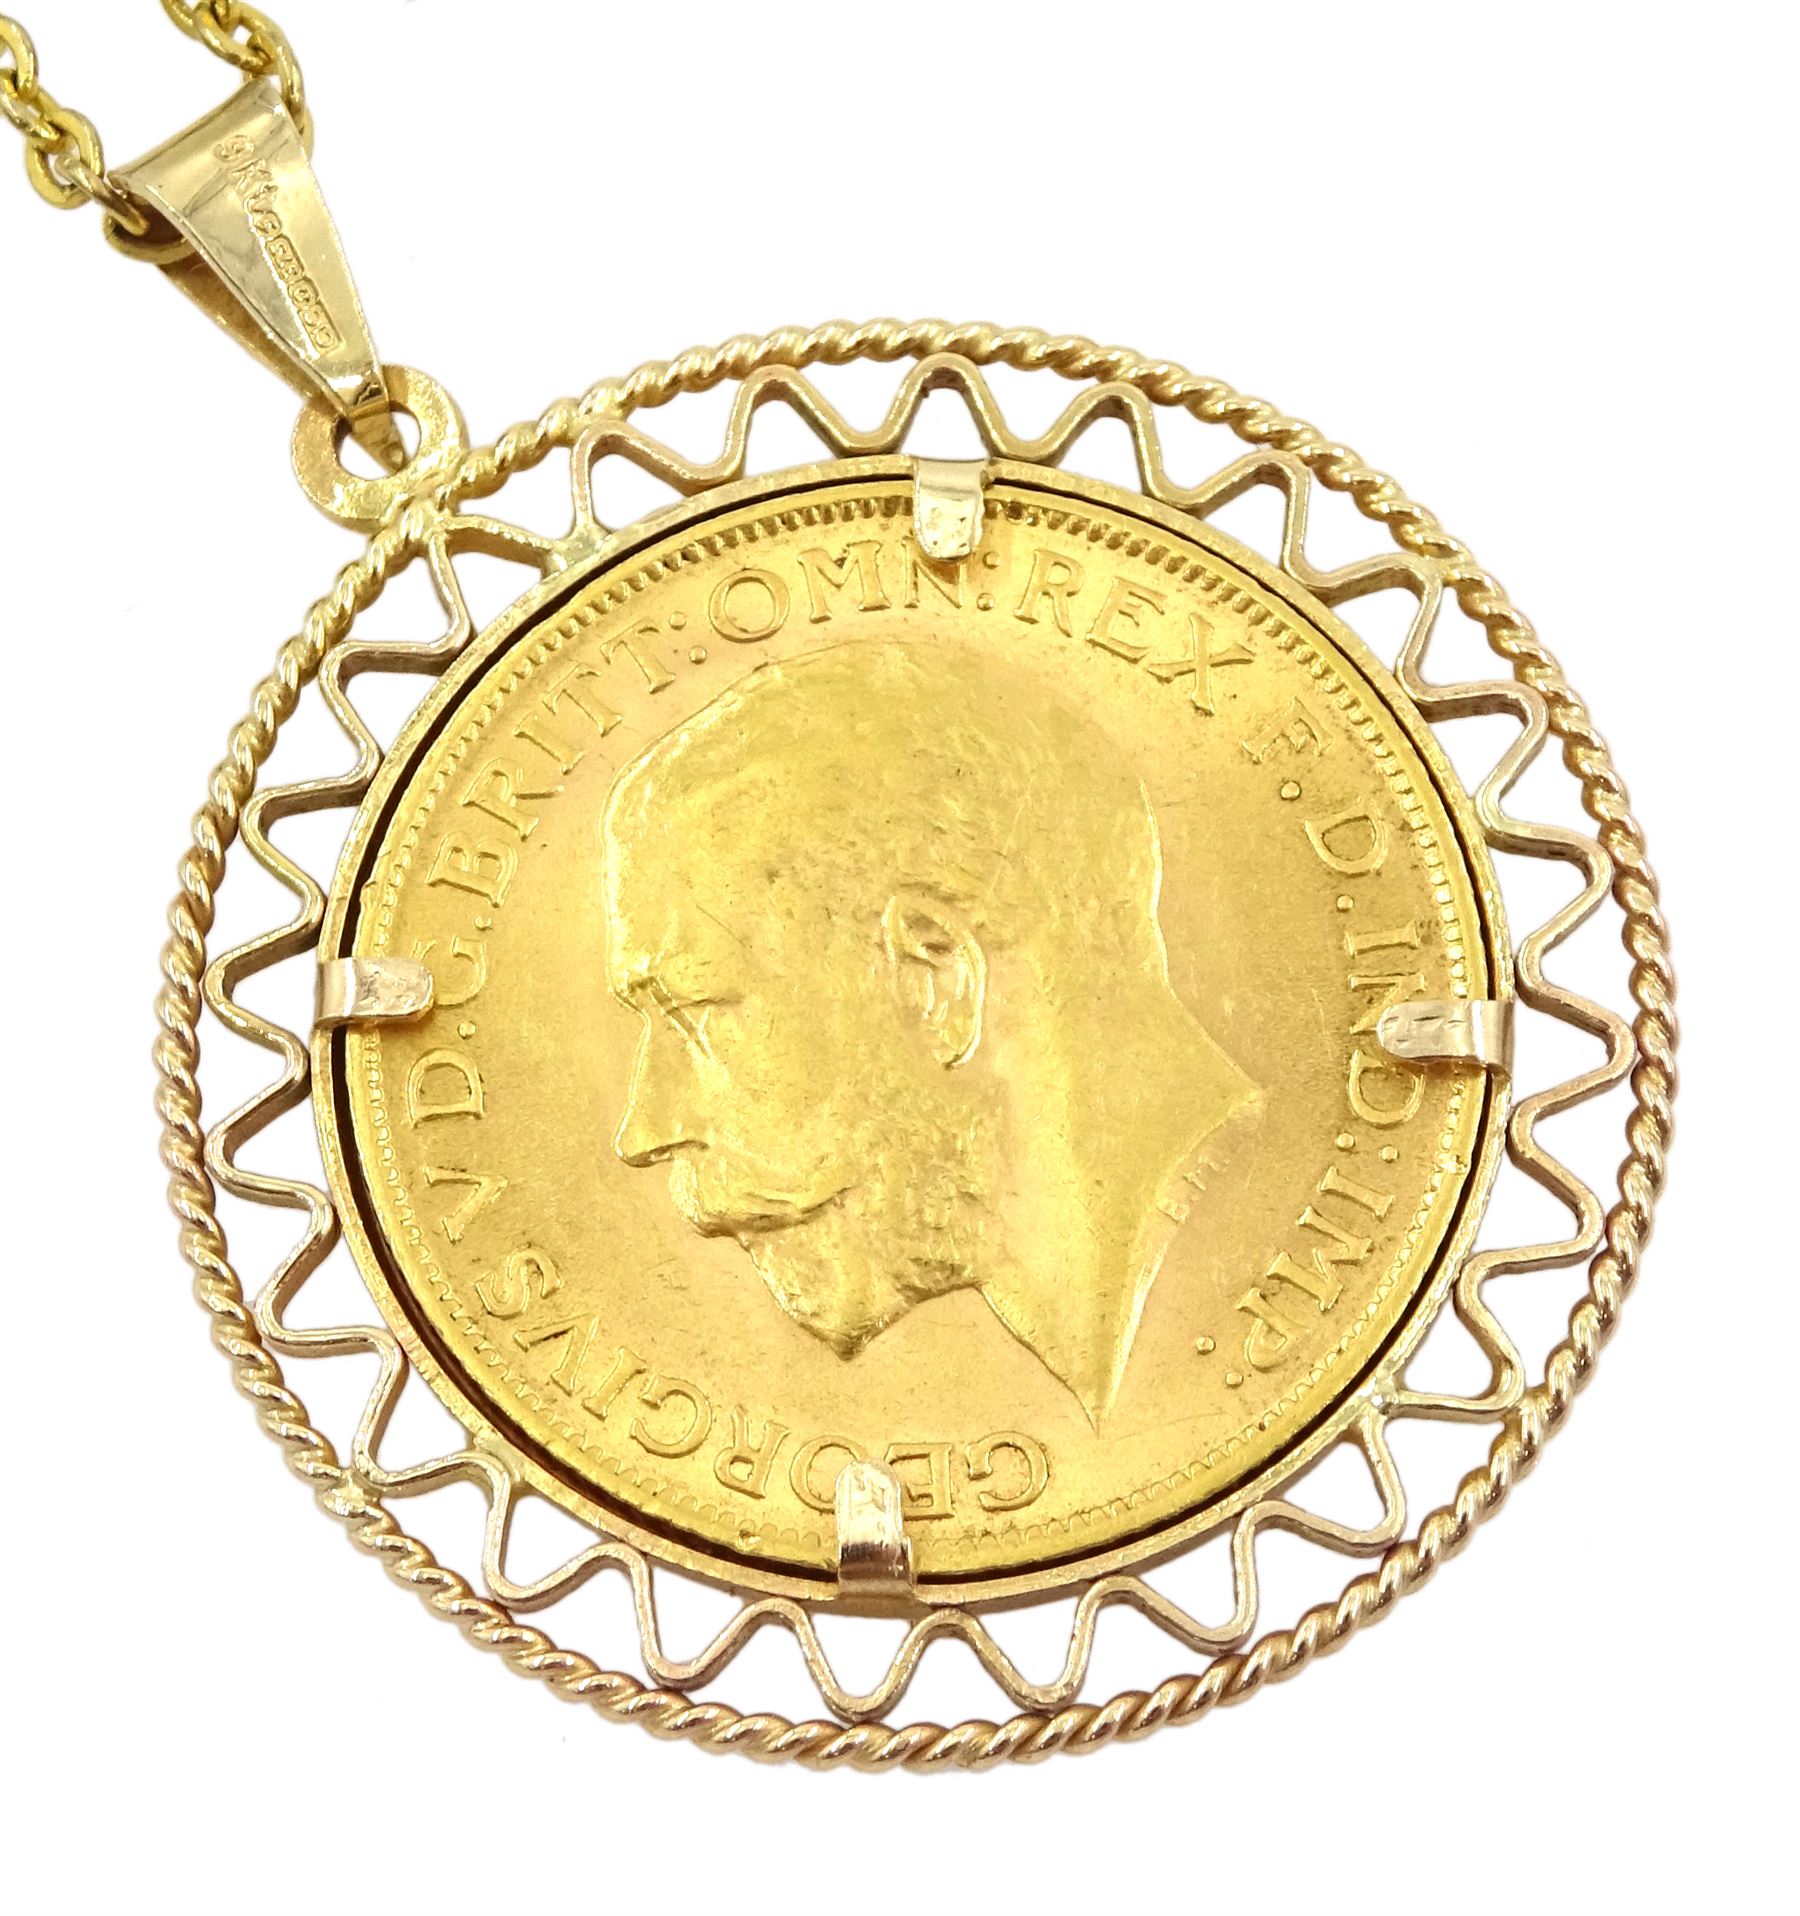 King George V 1913 gold full sovereign coin - Image 3 of 3